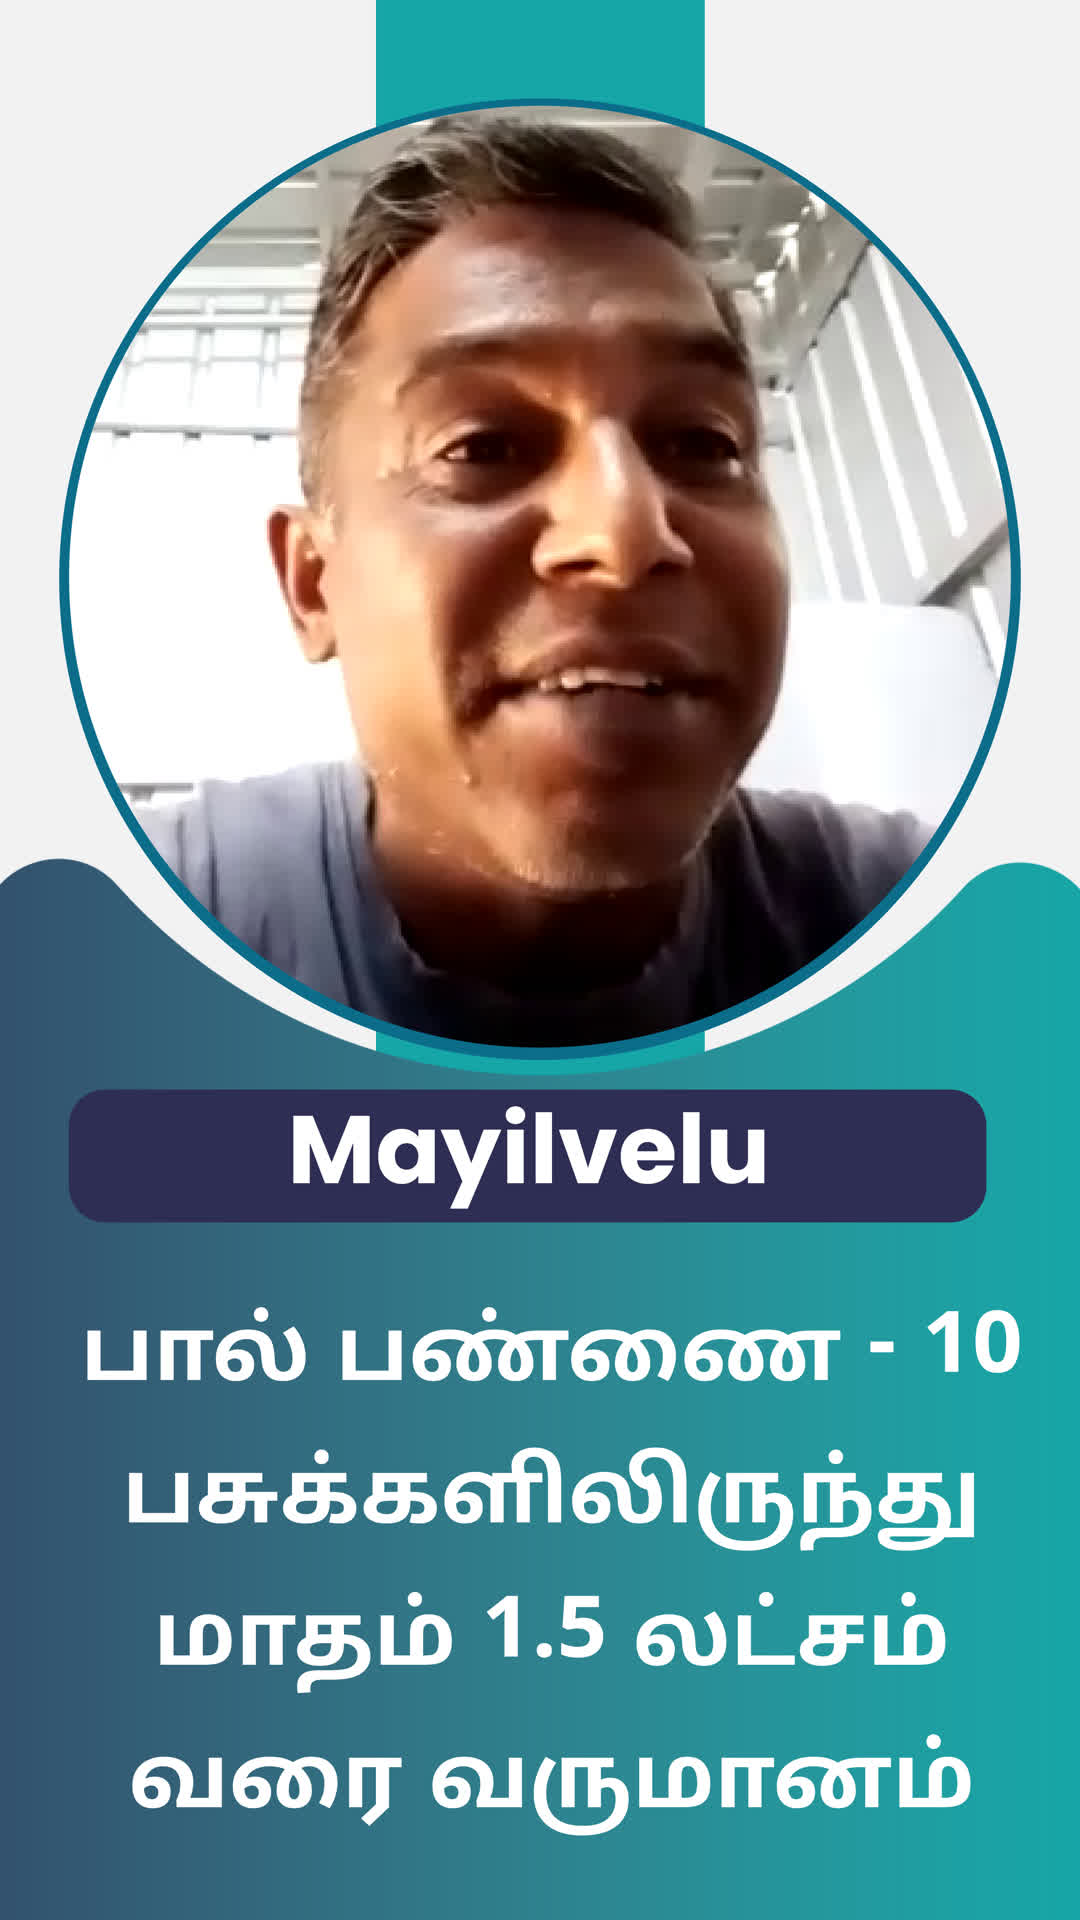 Mayilvelu's Honest Review of ffreedom app - Coimbatore ,Tamil Nadu